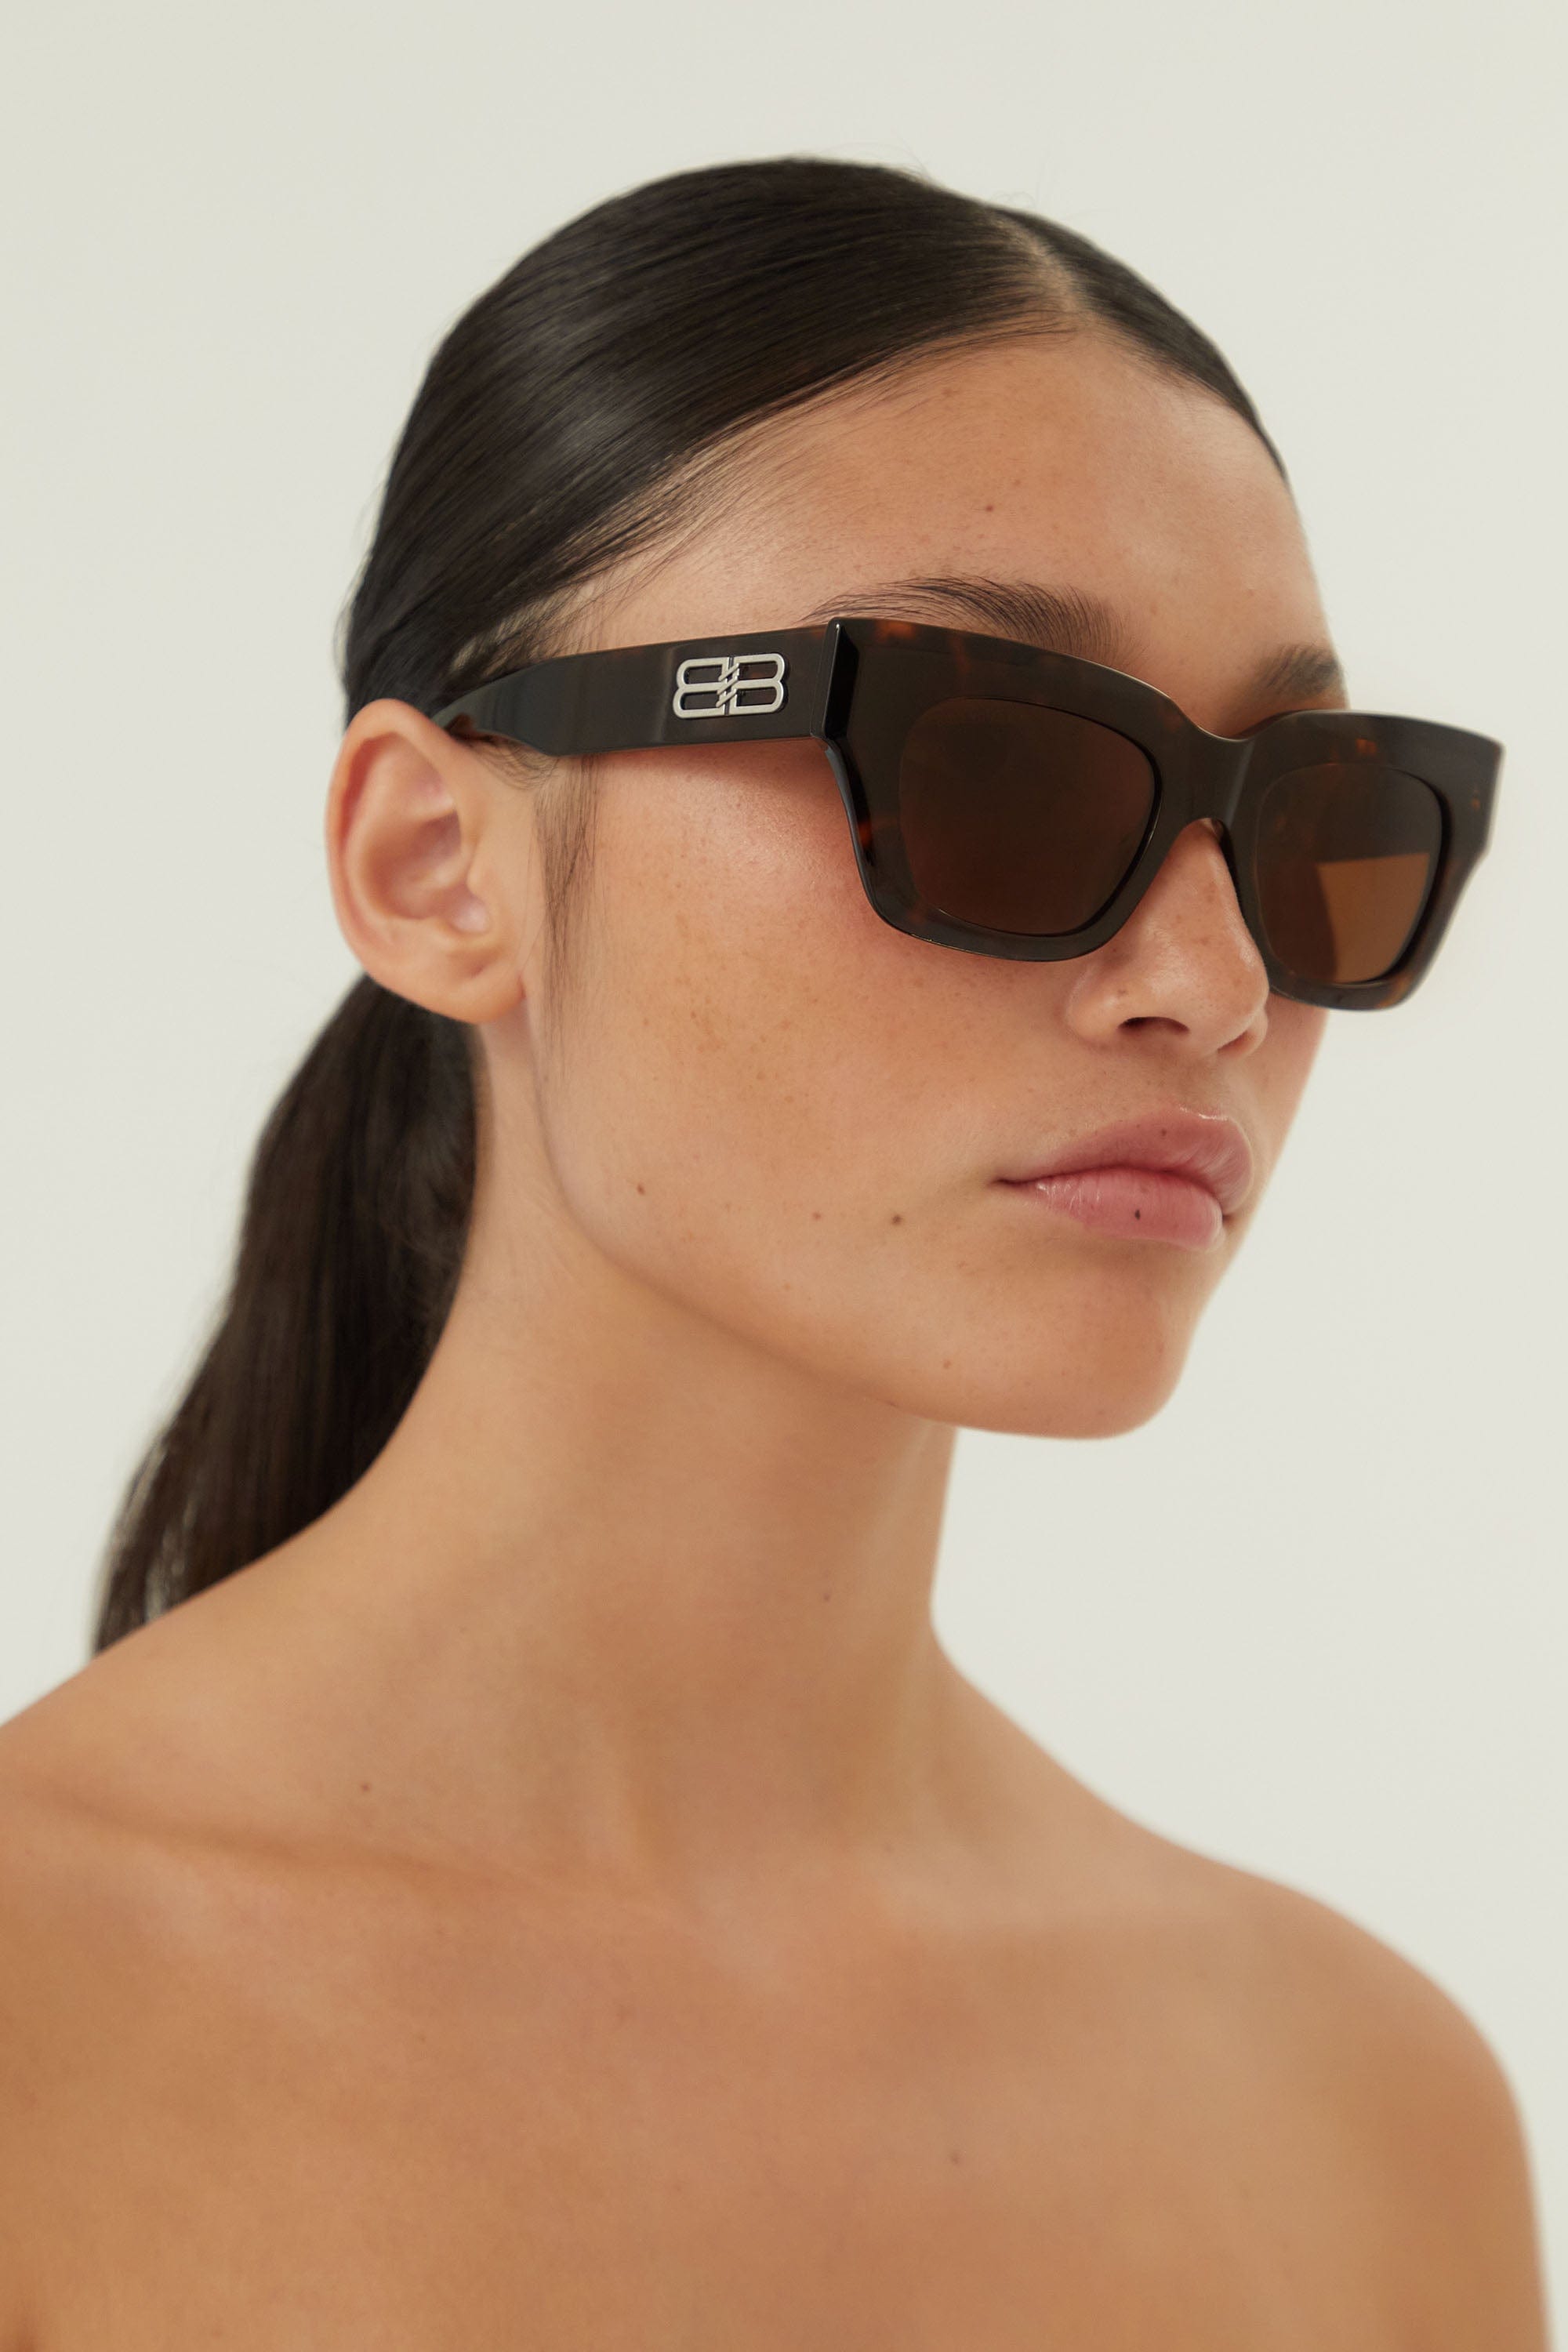 Balenciaga squared femenine havana sunglasses - Eyewear Club